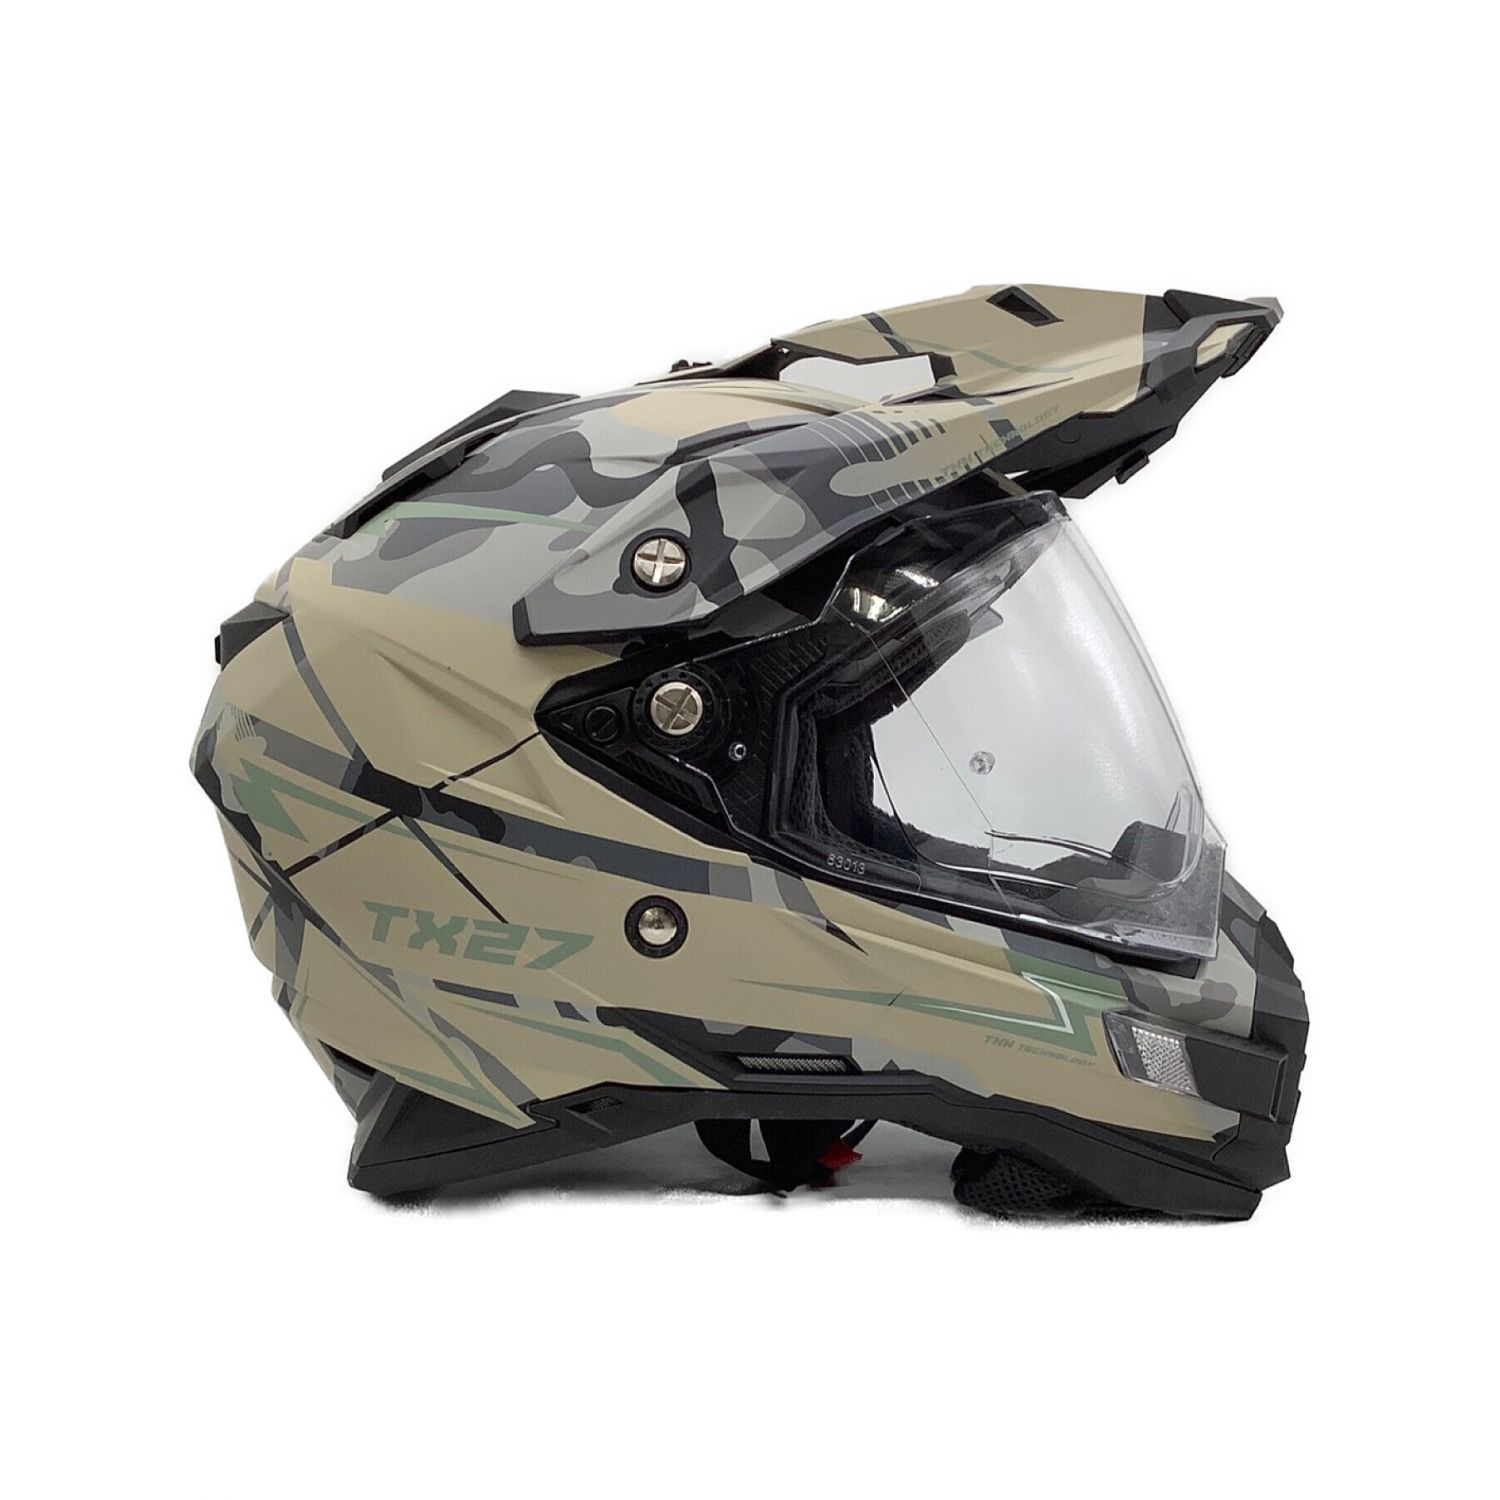 THH バイク用ヘルメット SIZE XL TX-27 Trooper PSCマーク(バイク用ヘルメット)有